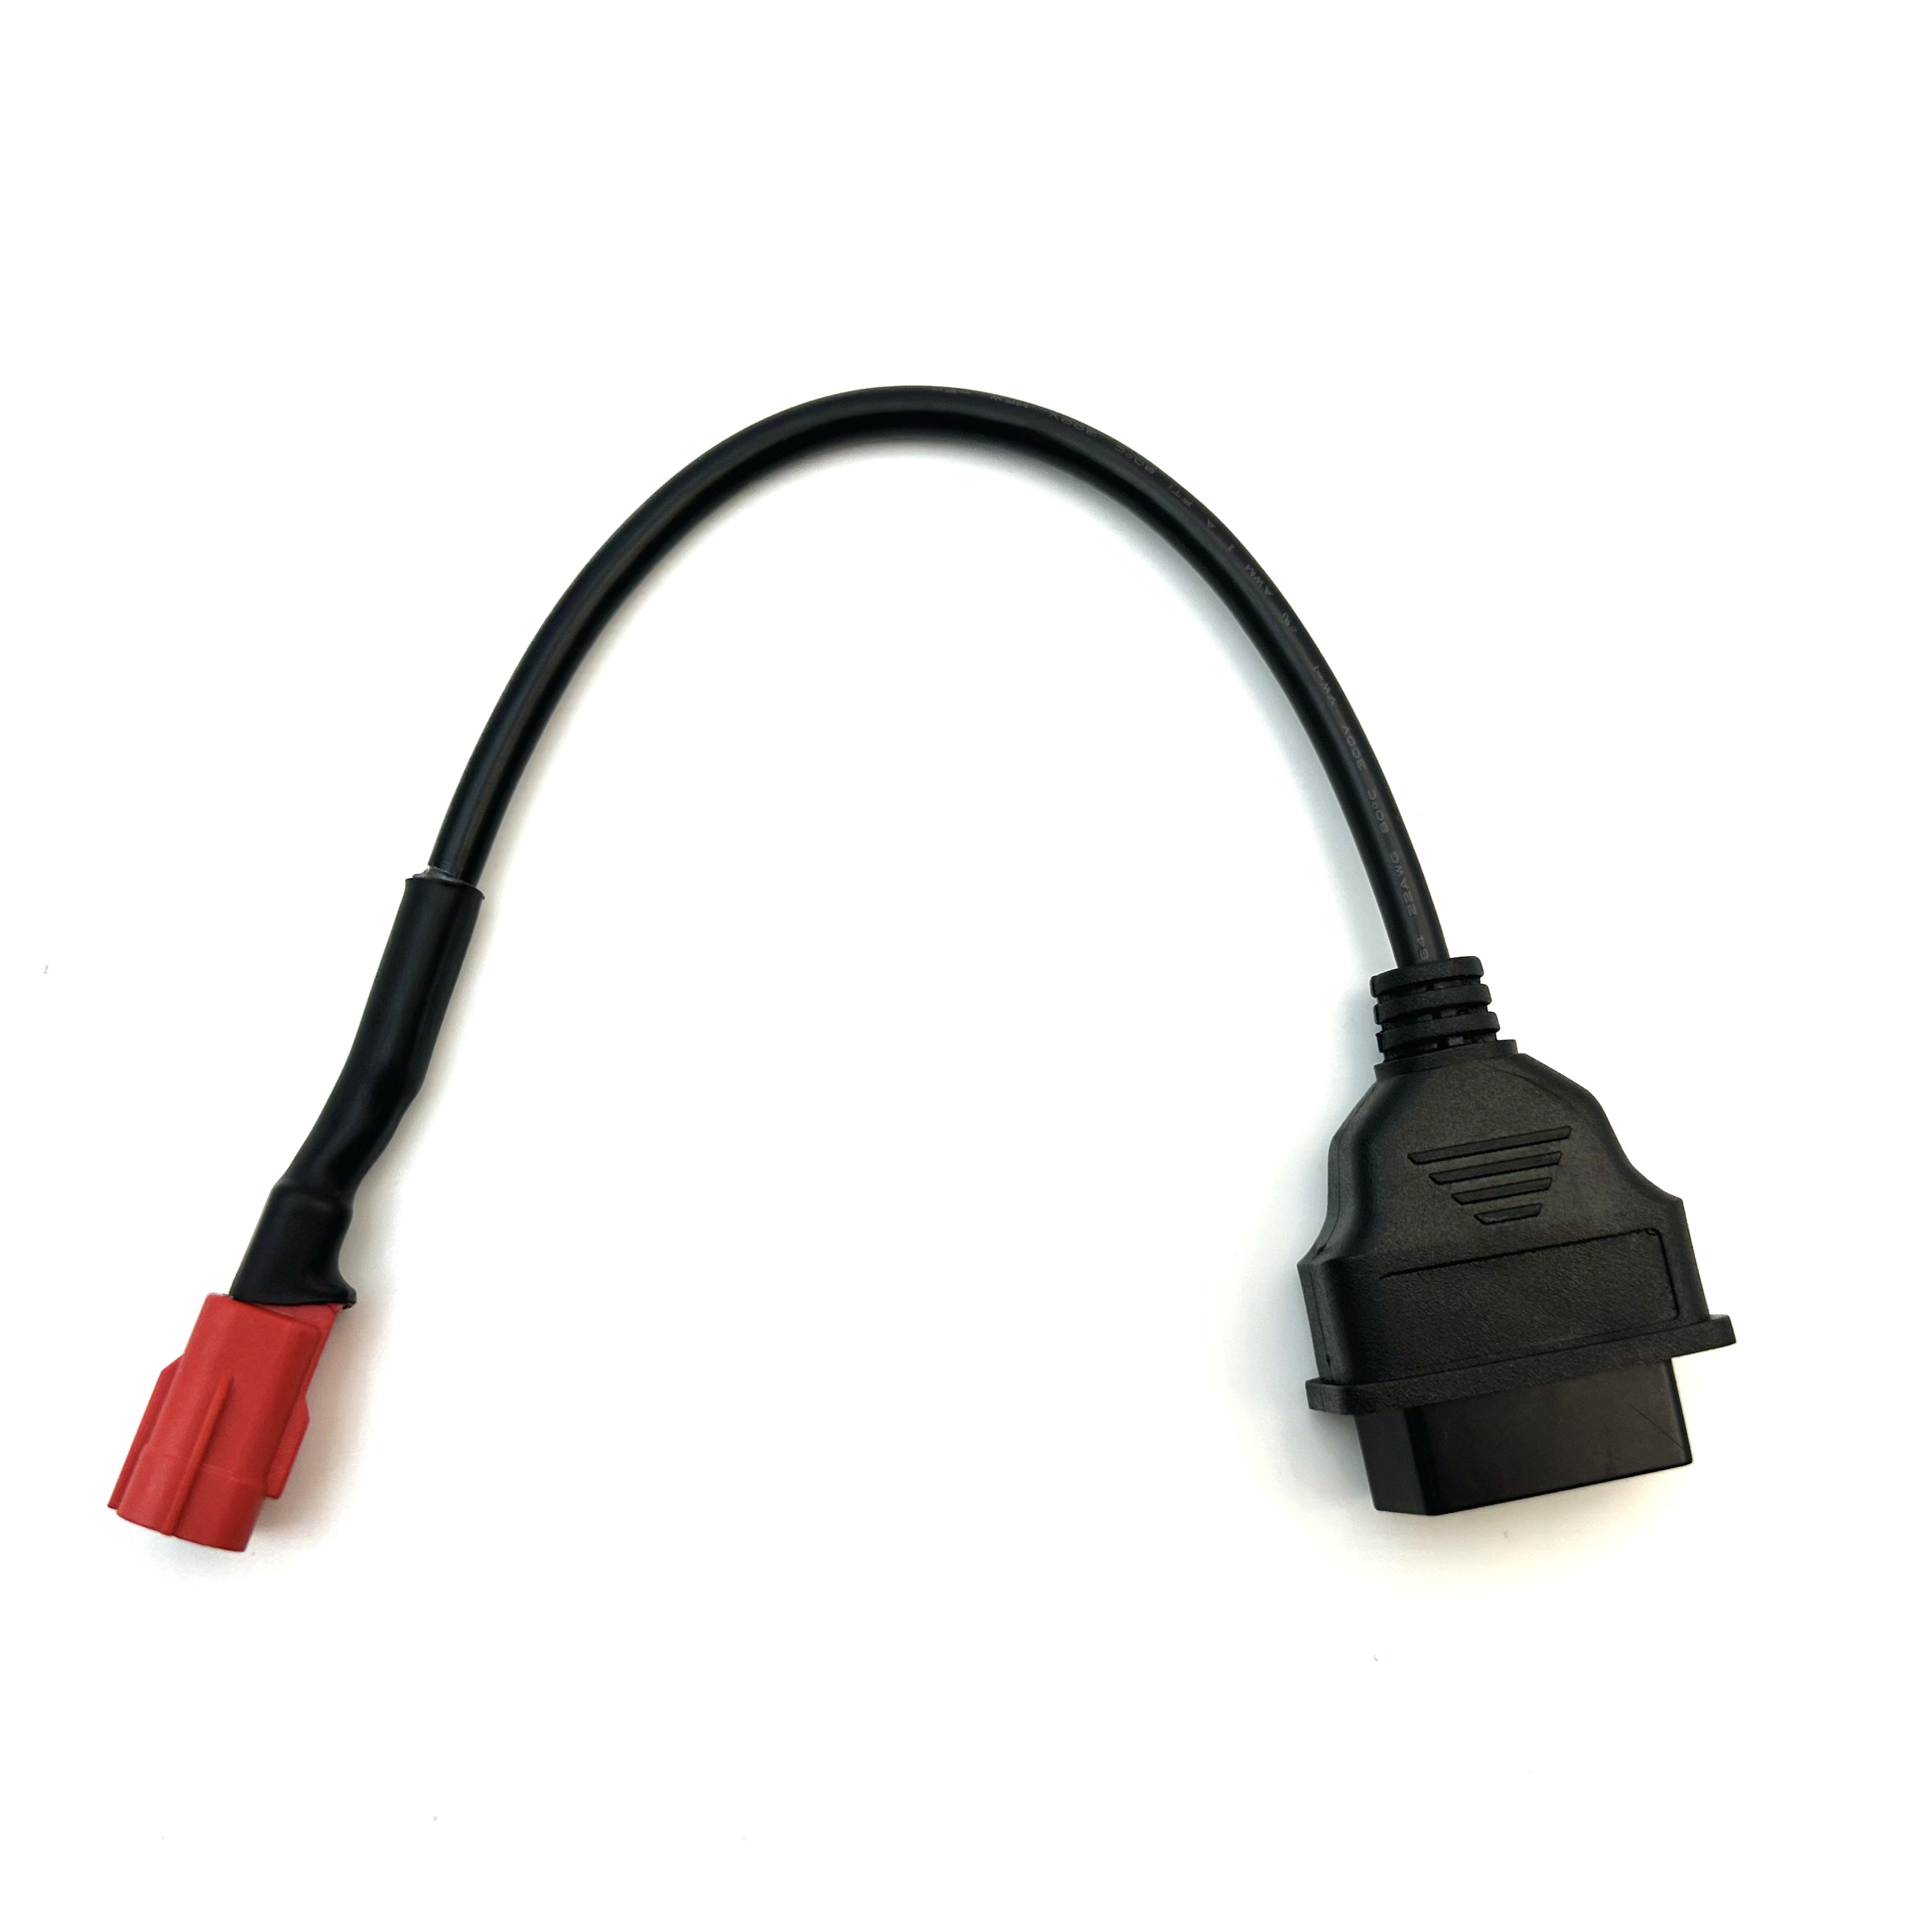 OBD2 to 4 Pin Diagnostic Adapter Cable Motorcycle Honda 4pin